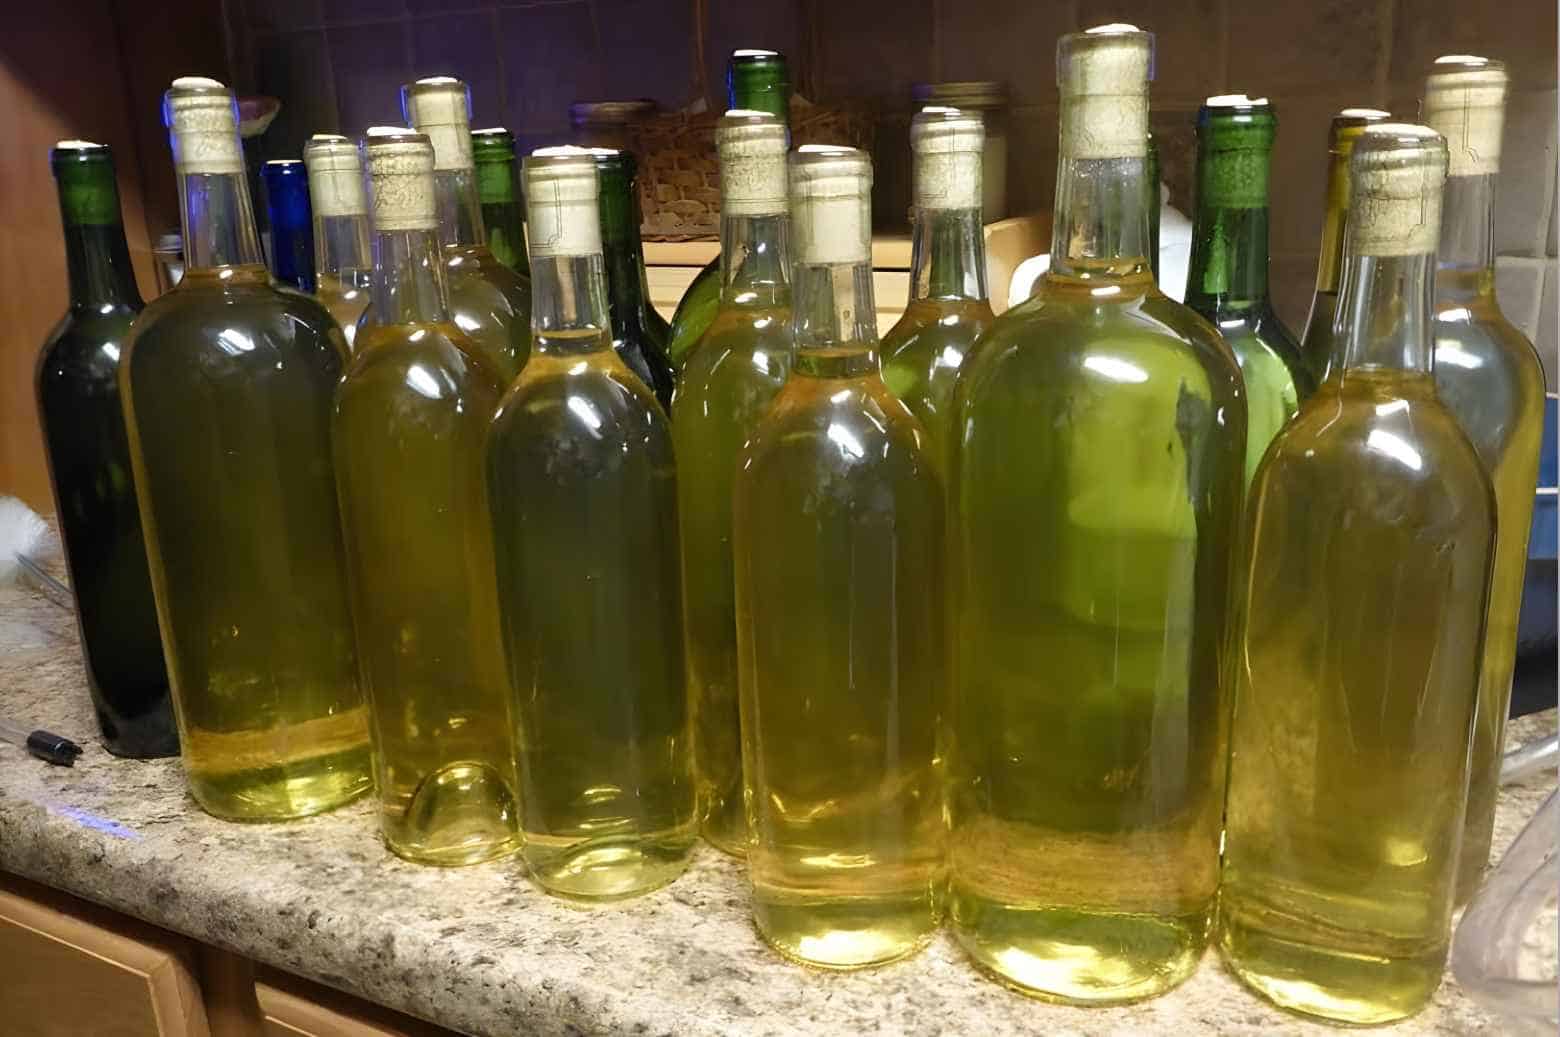 9 Steps to Make White Wine